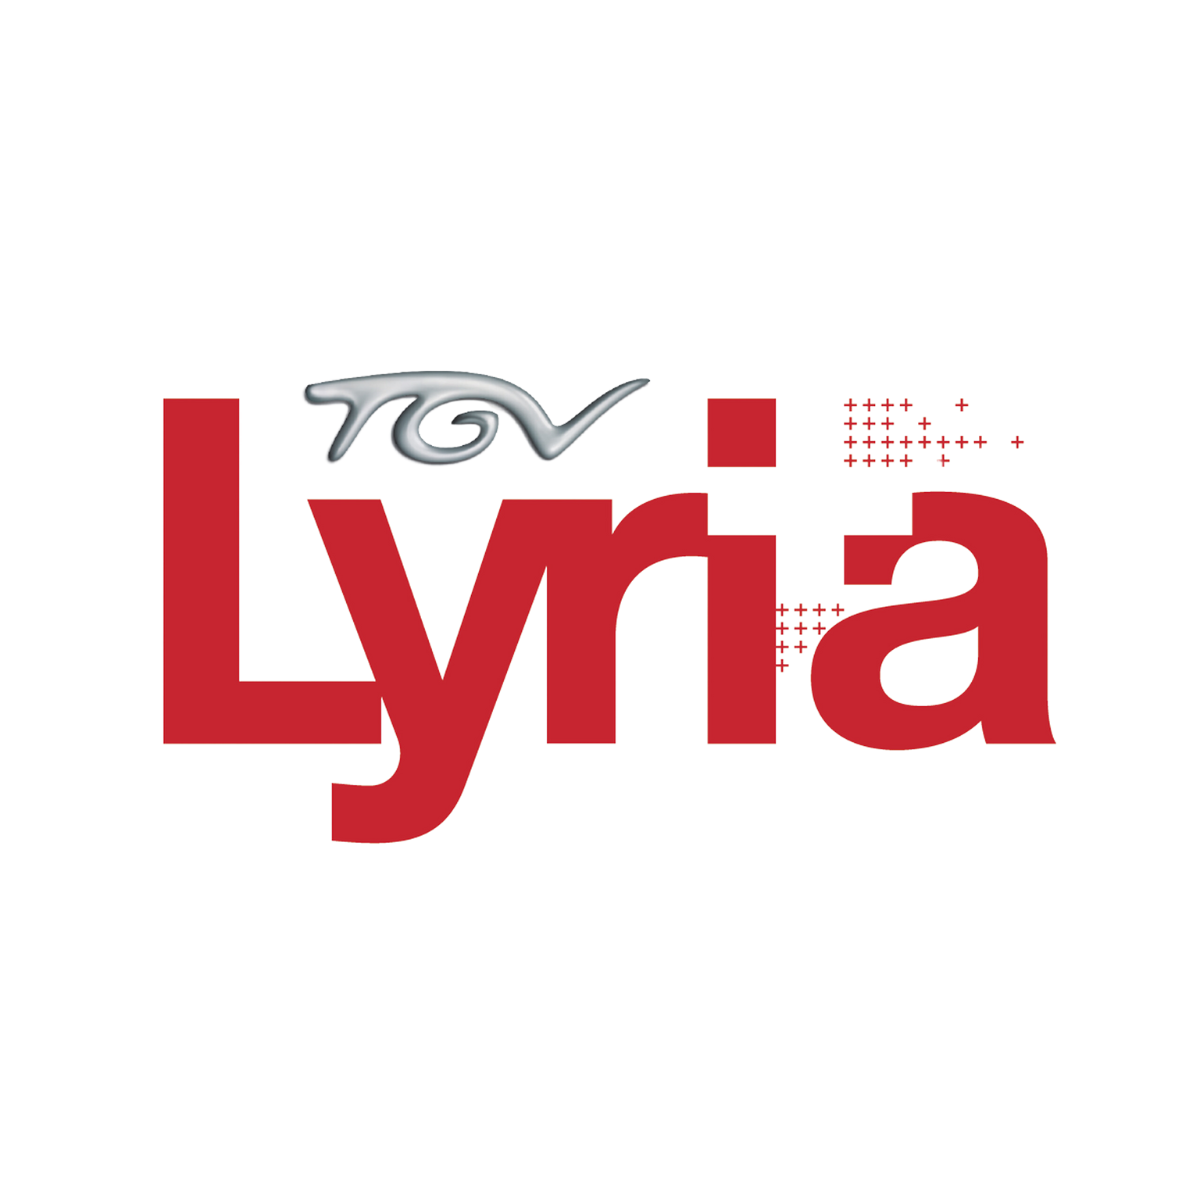 Lyria